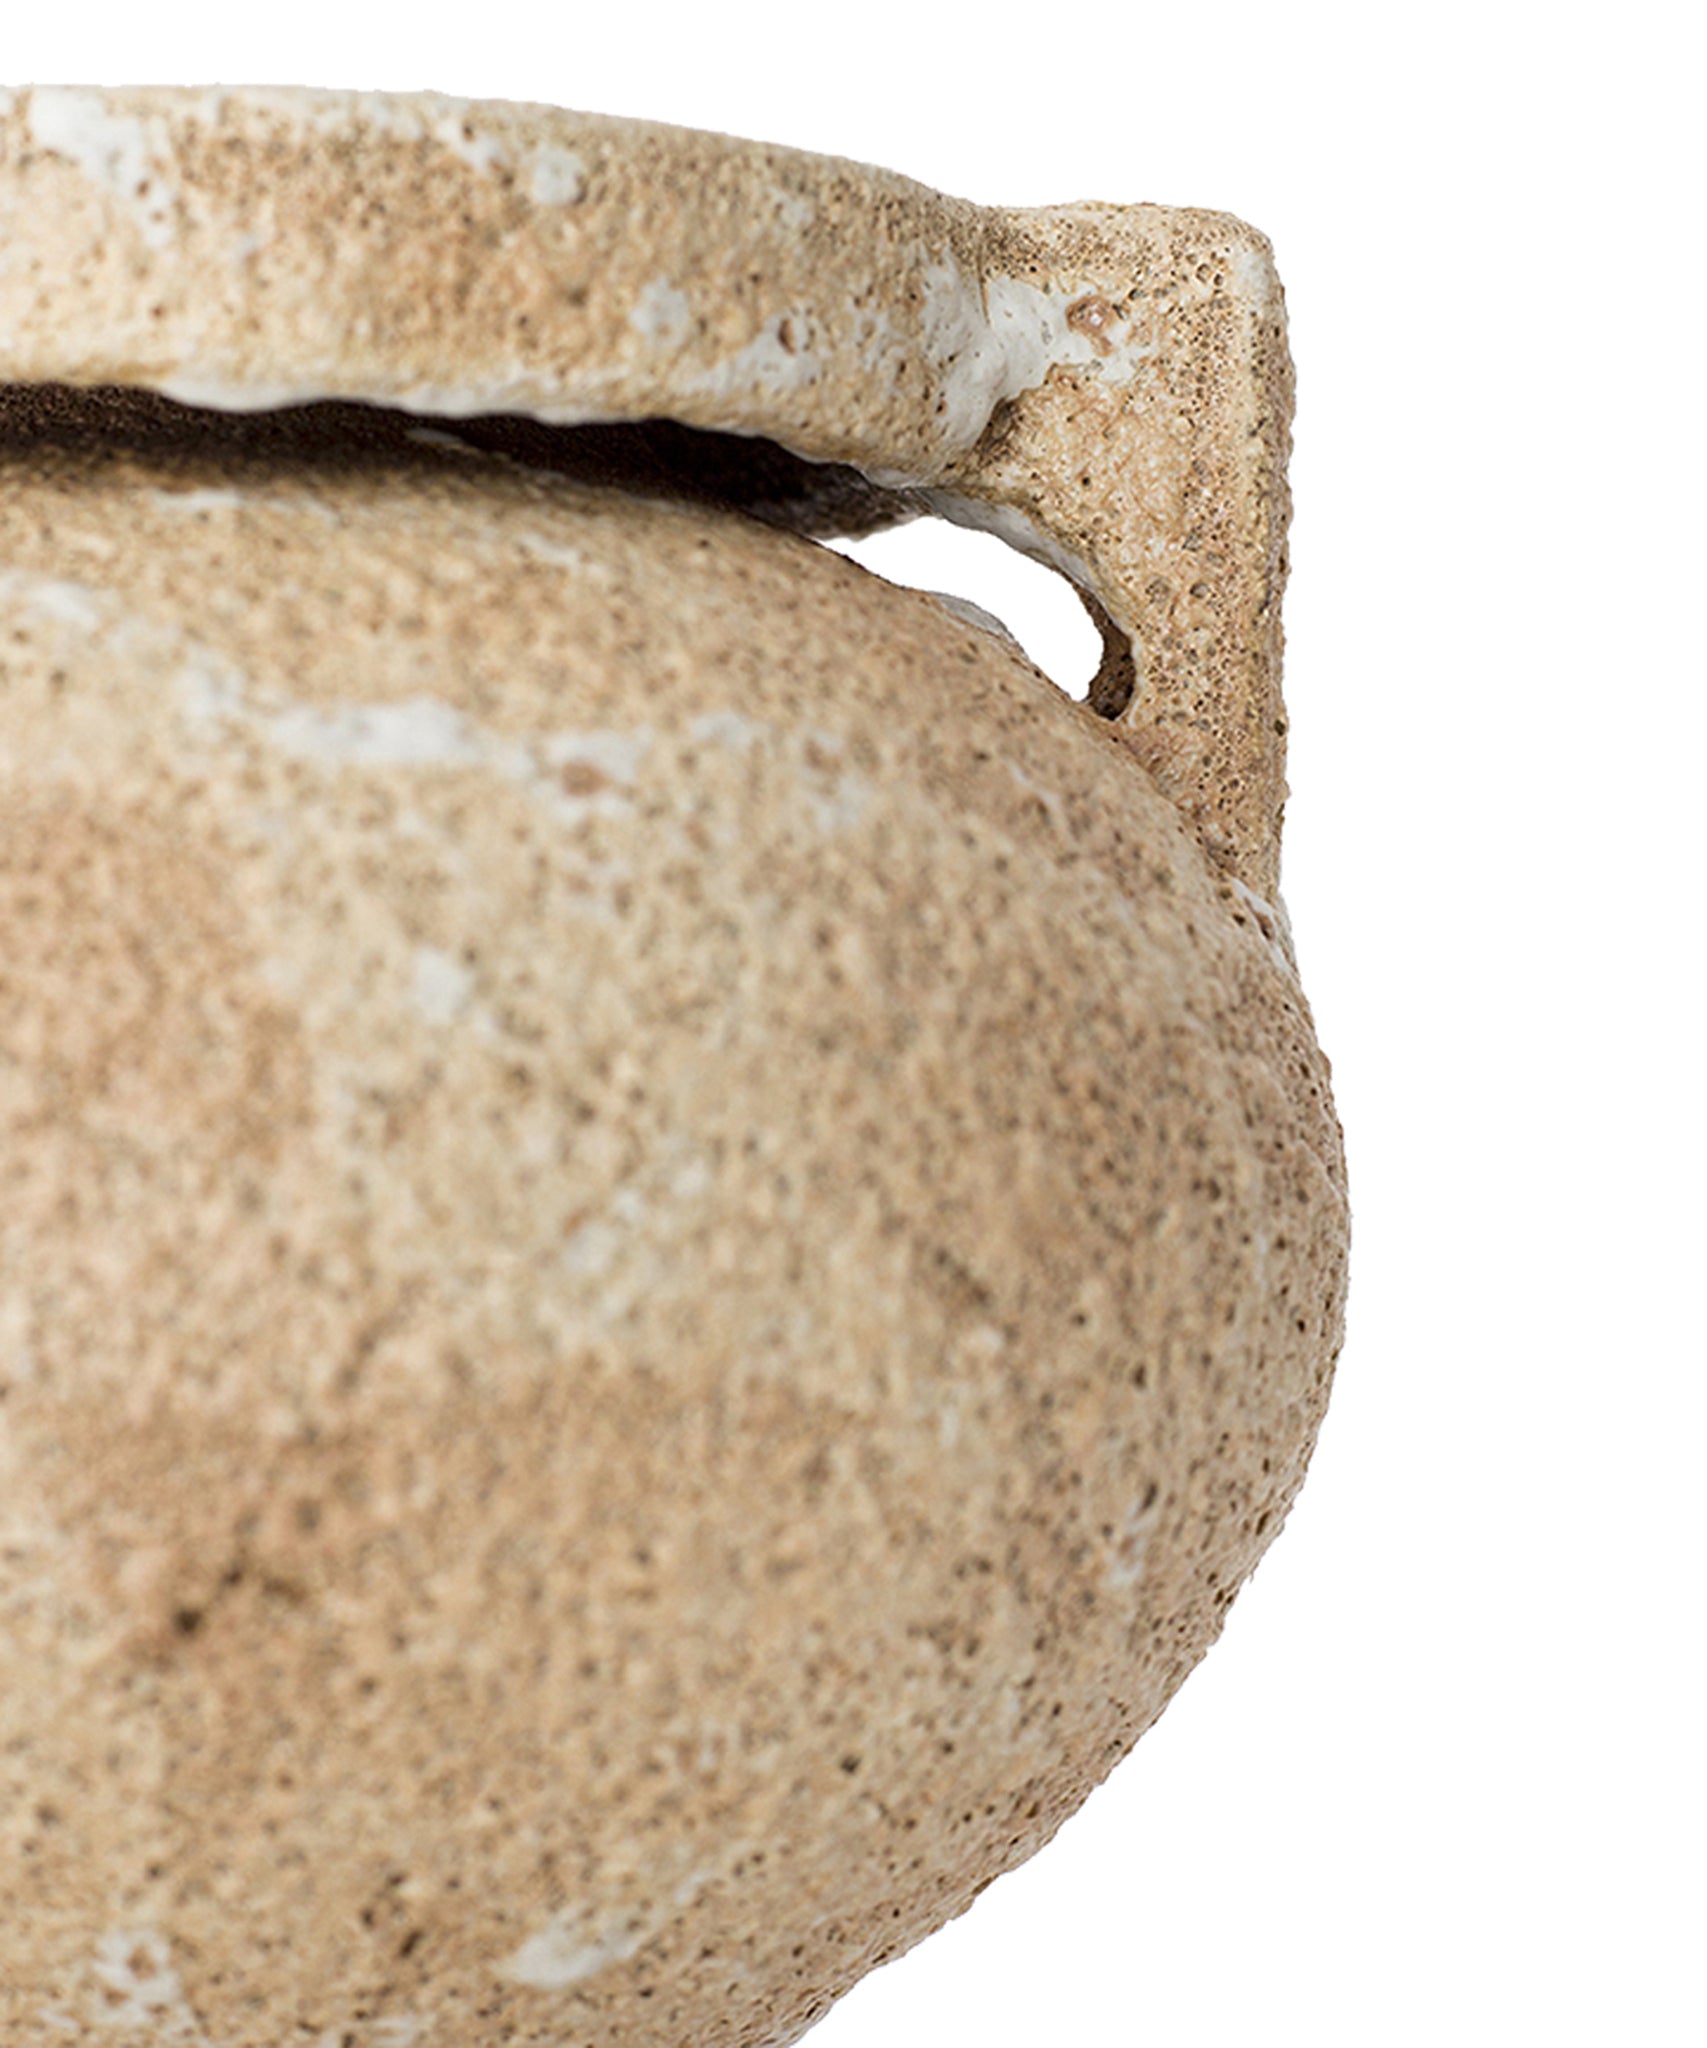 Arq 004 Stoneware Vase